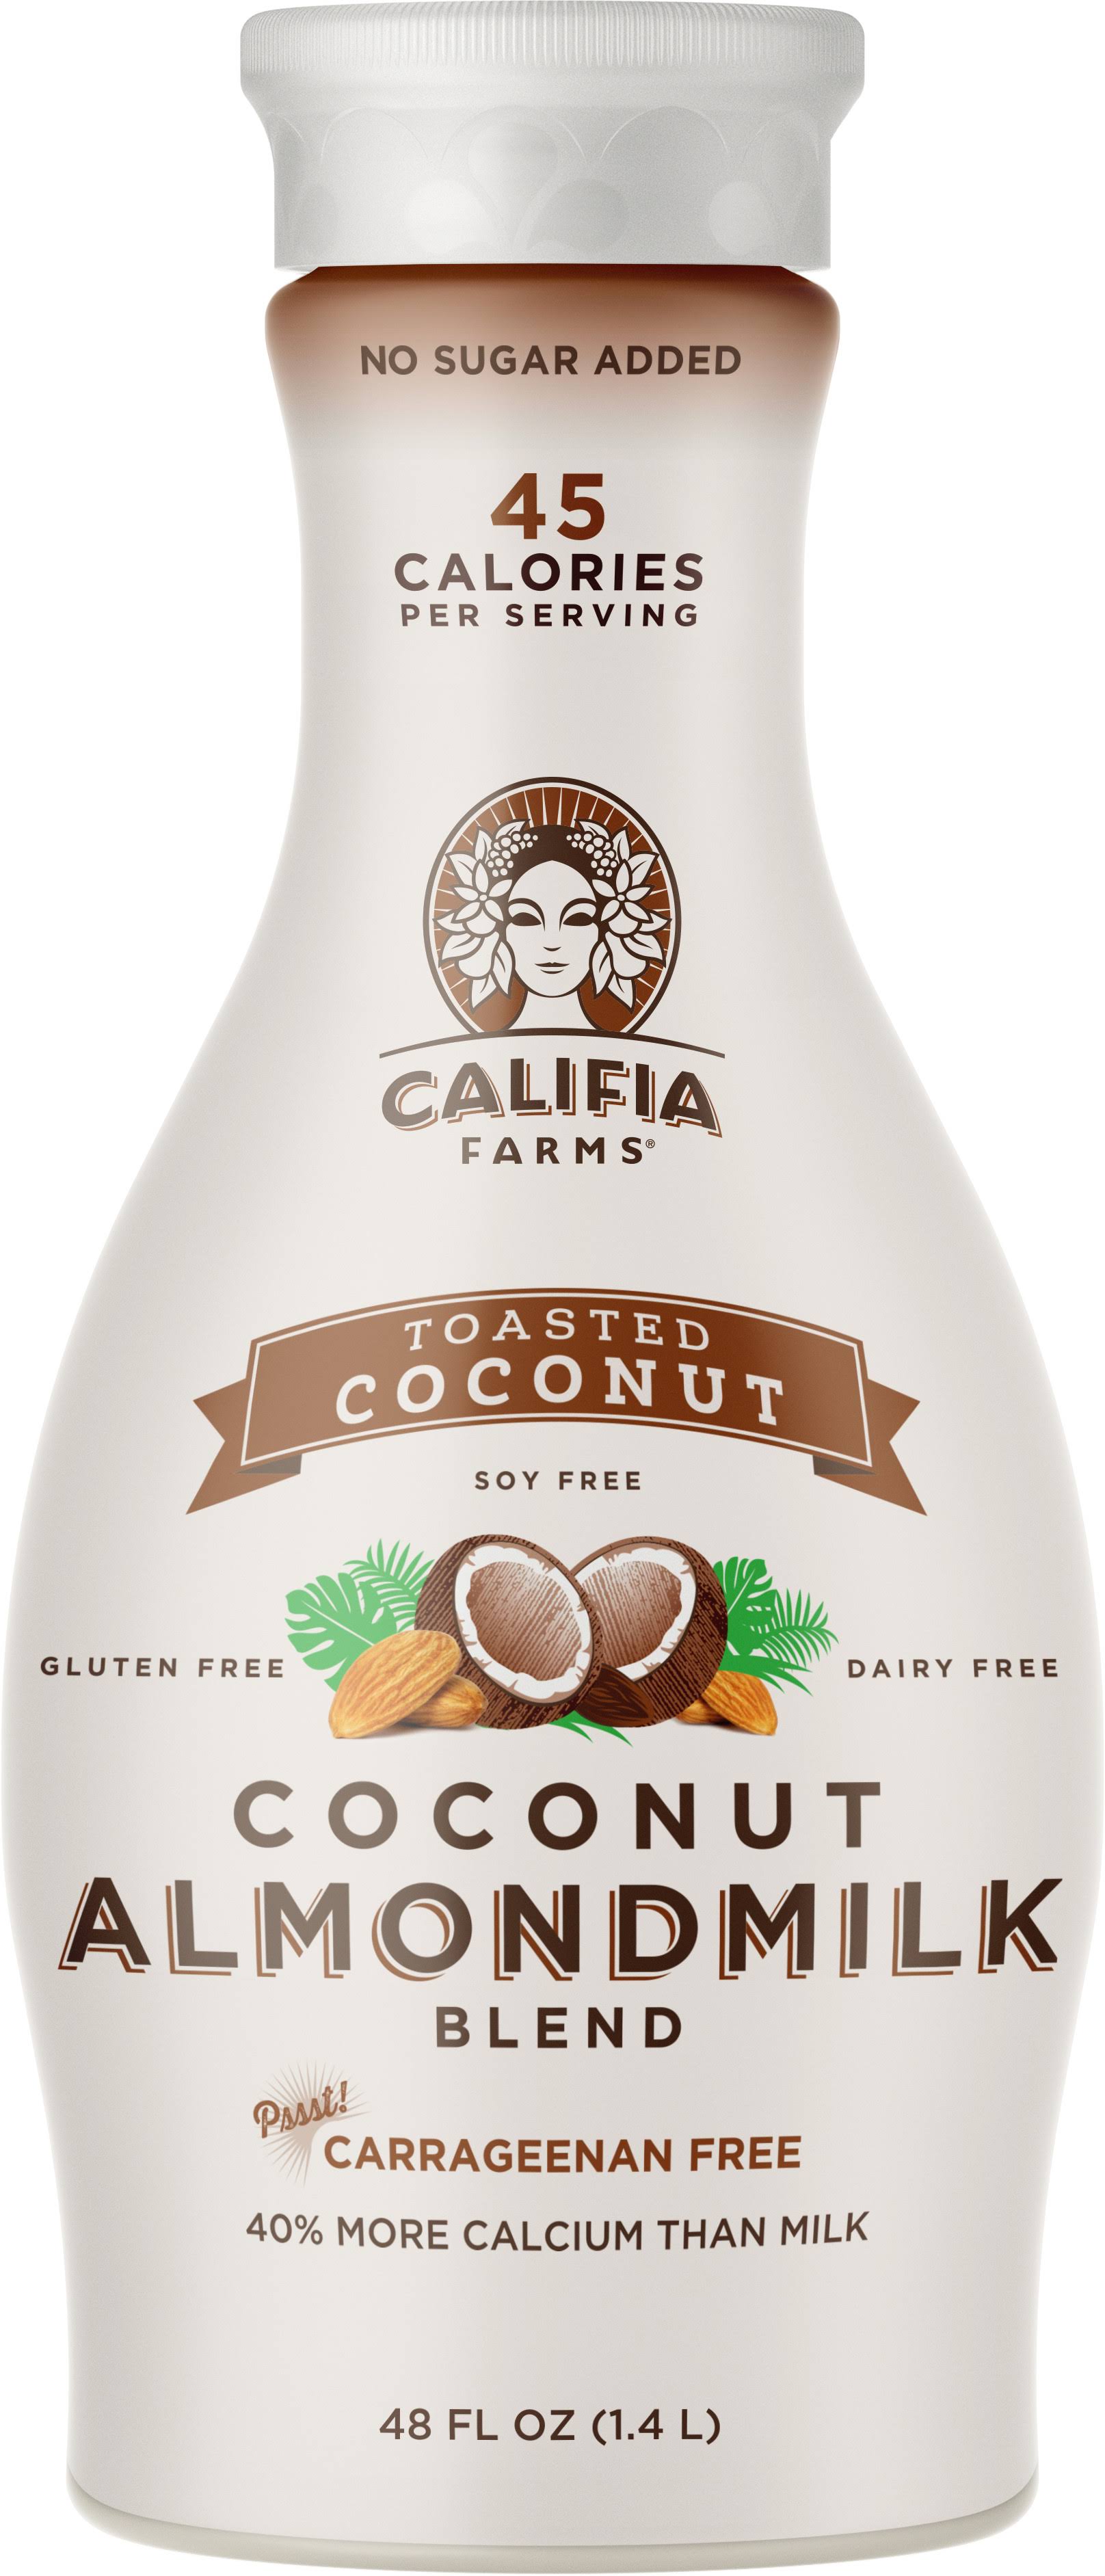 Califia Farms Toasted Coconut Almondmilk Blend - 48oz